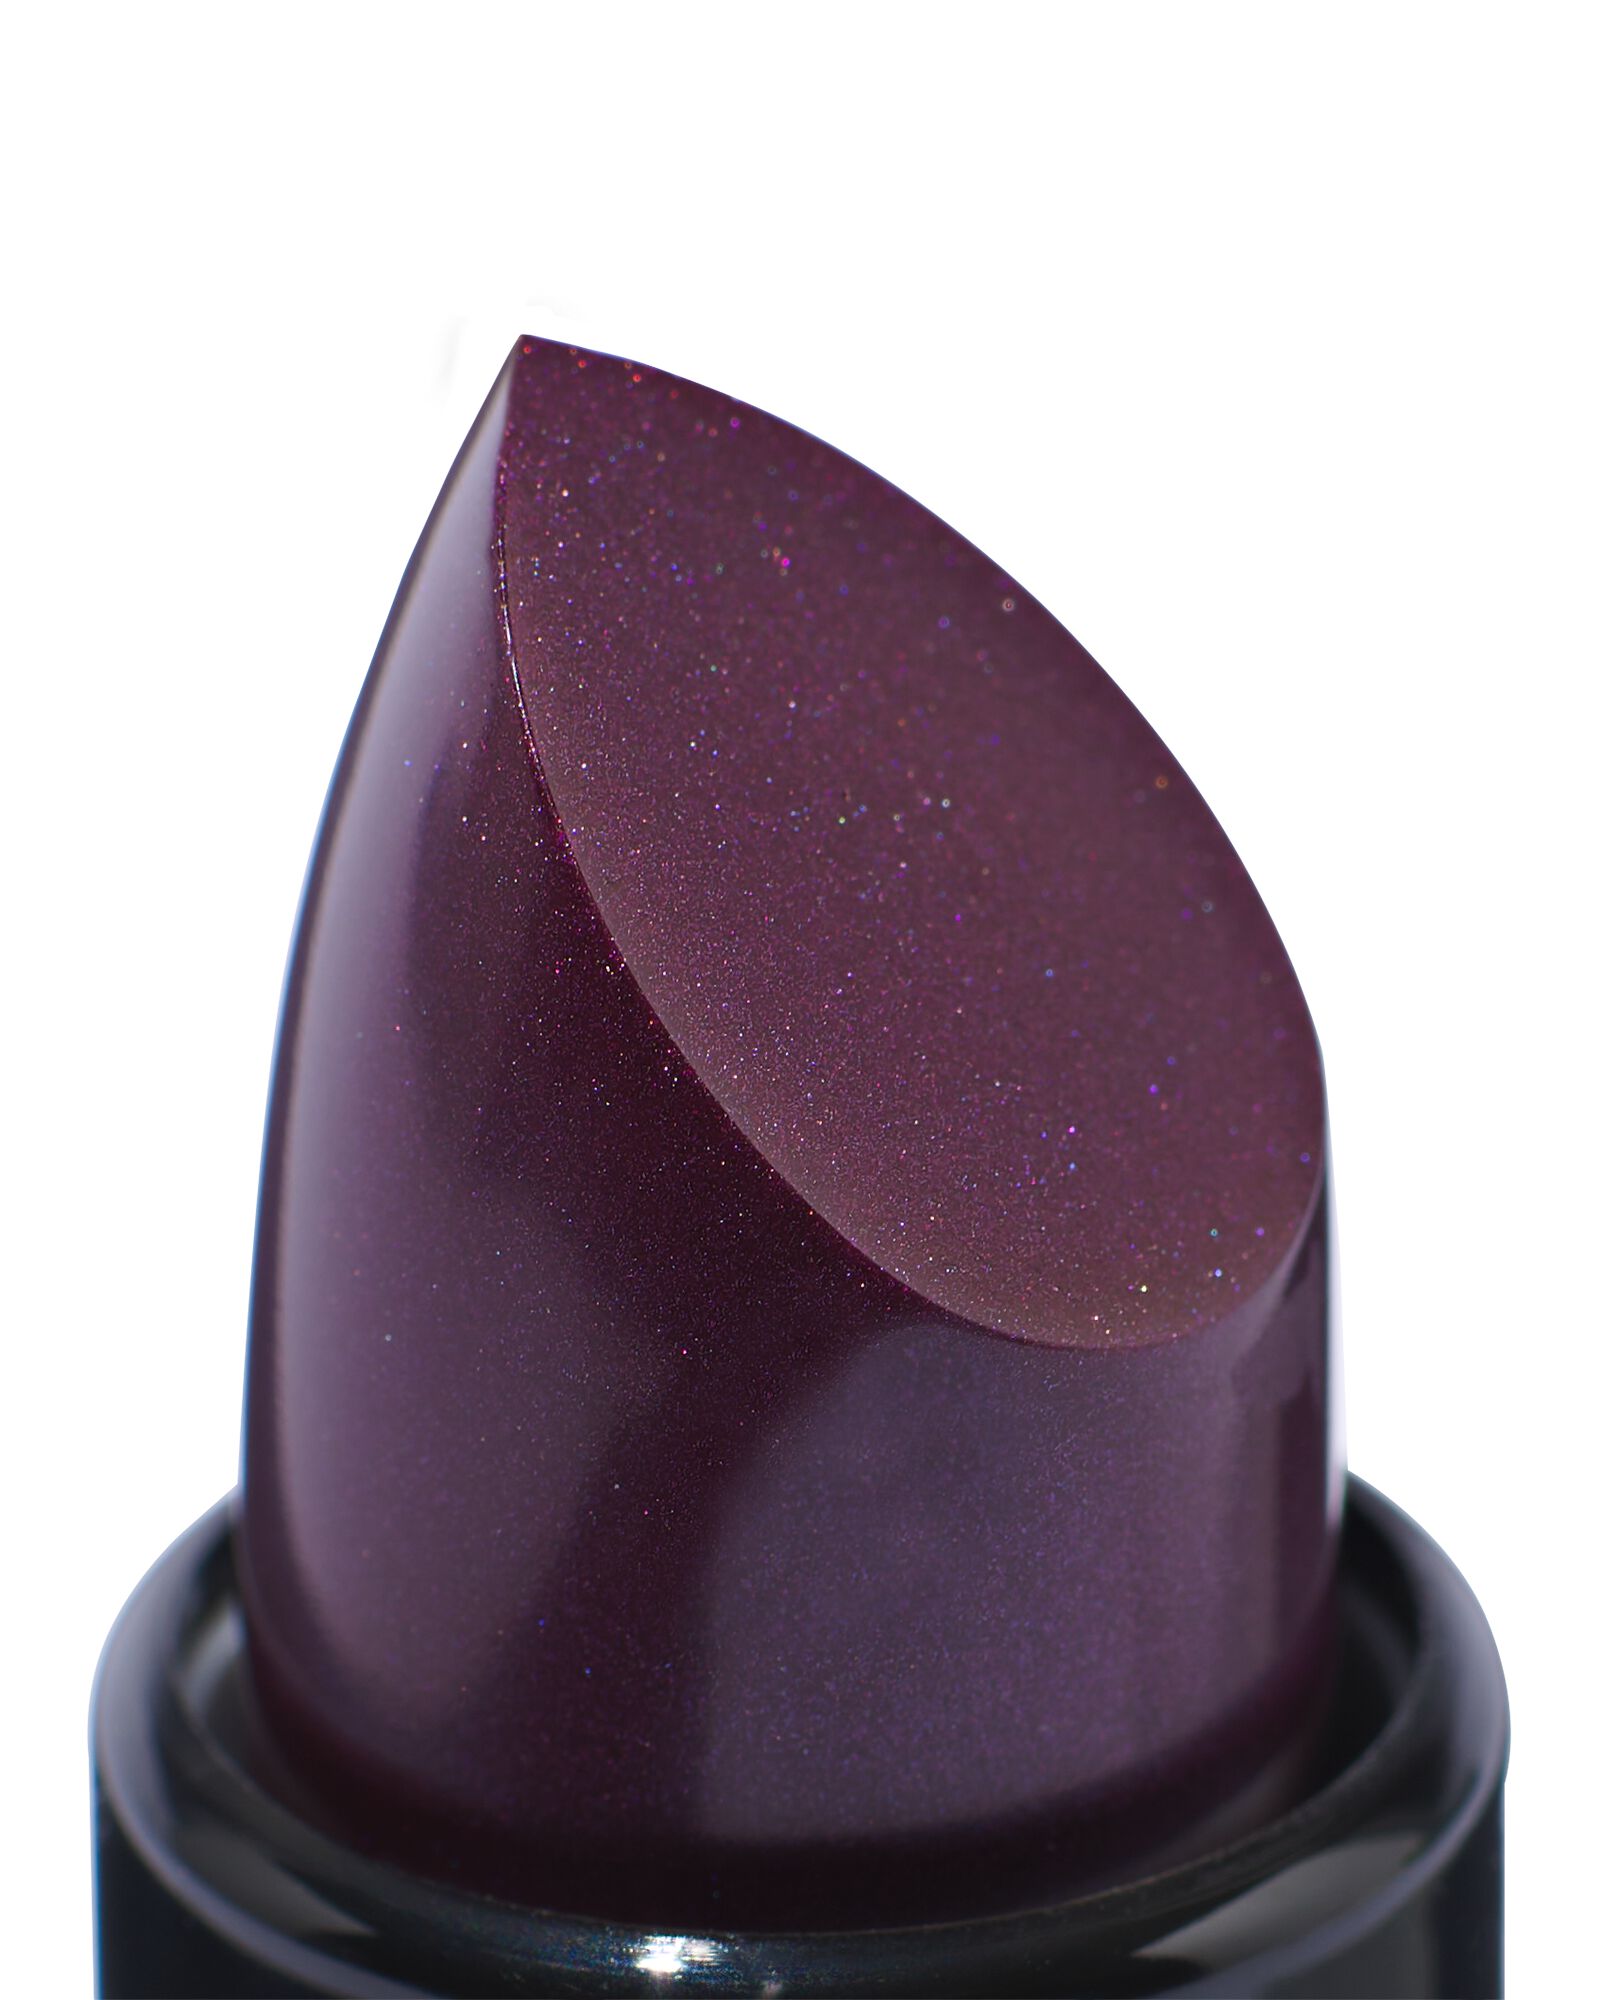 HEMA Moisturising Lipstick 88 Powerful Plum - Crystal Finish Finish (violet foncé)